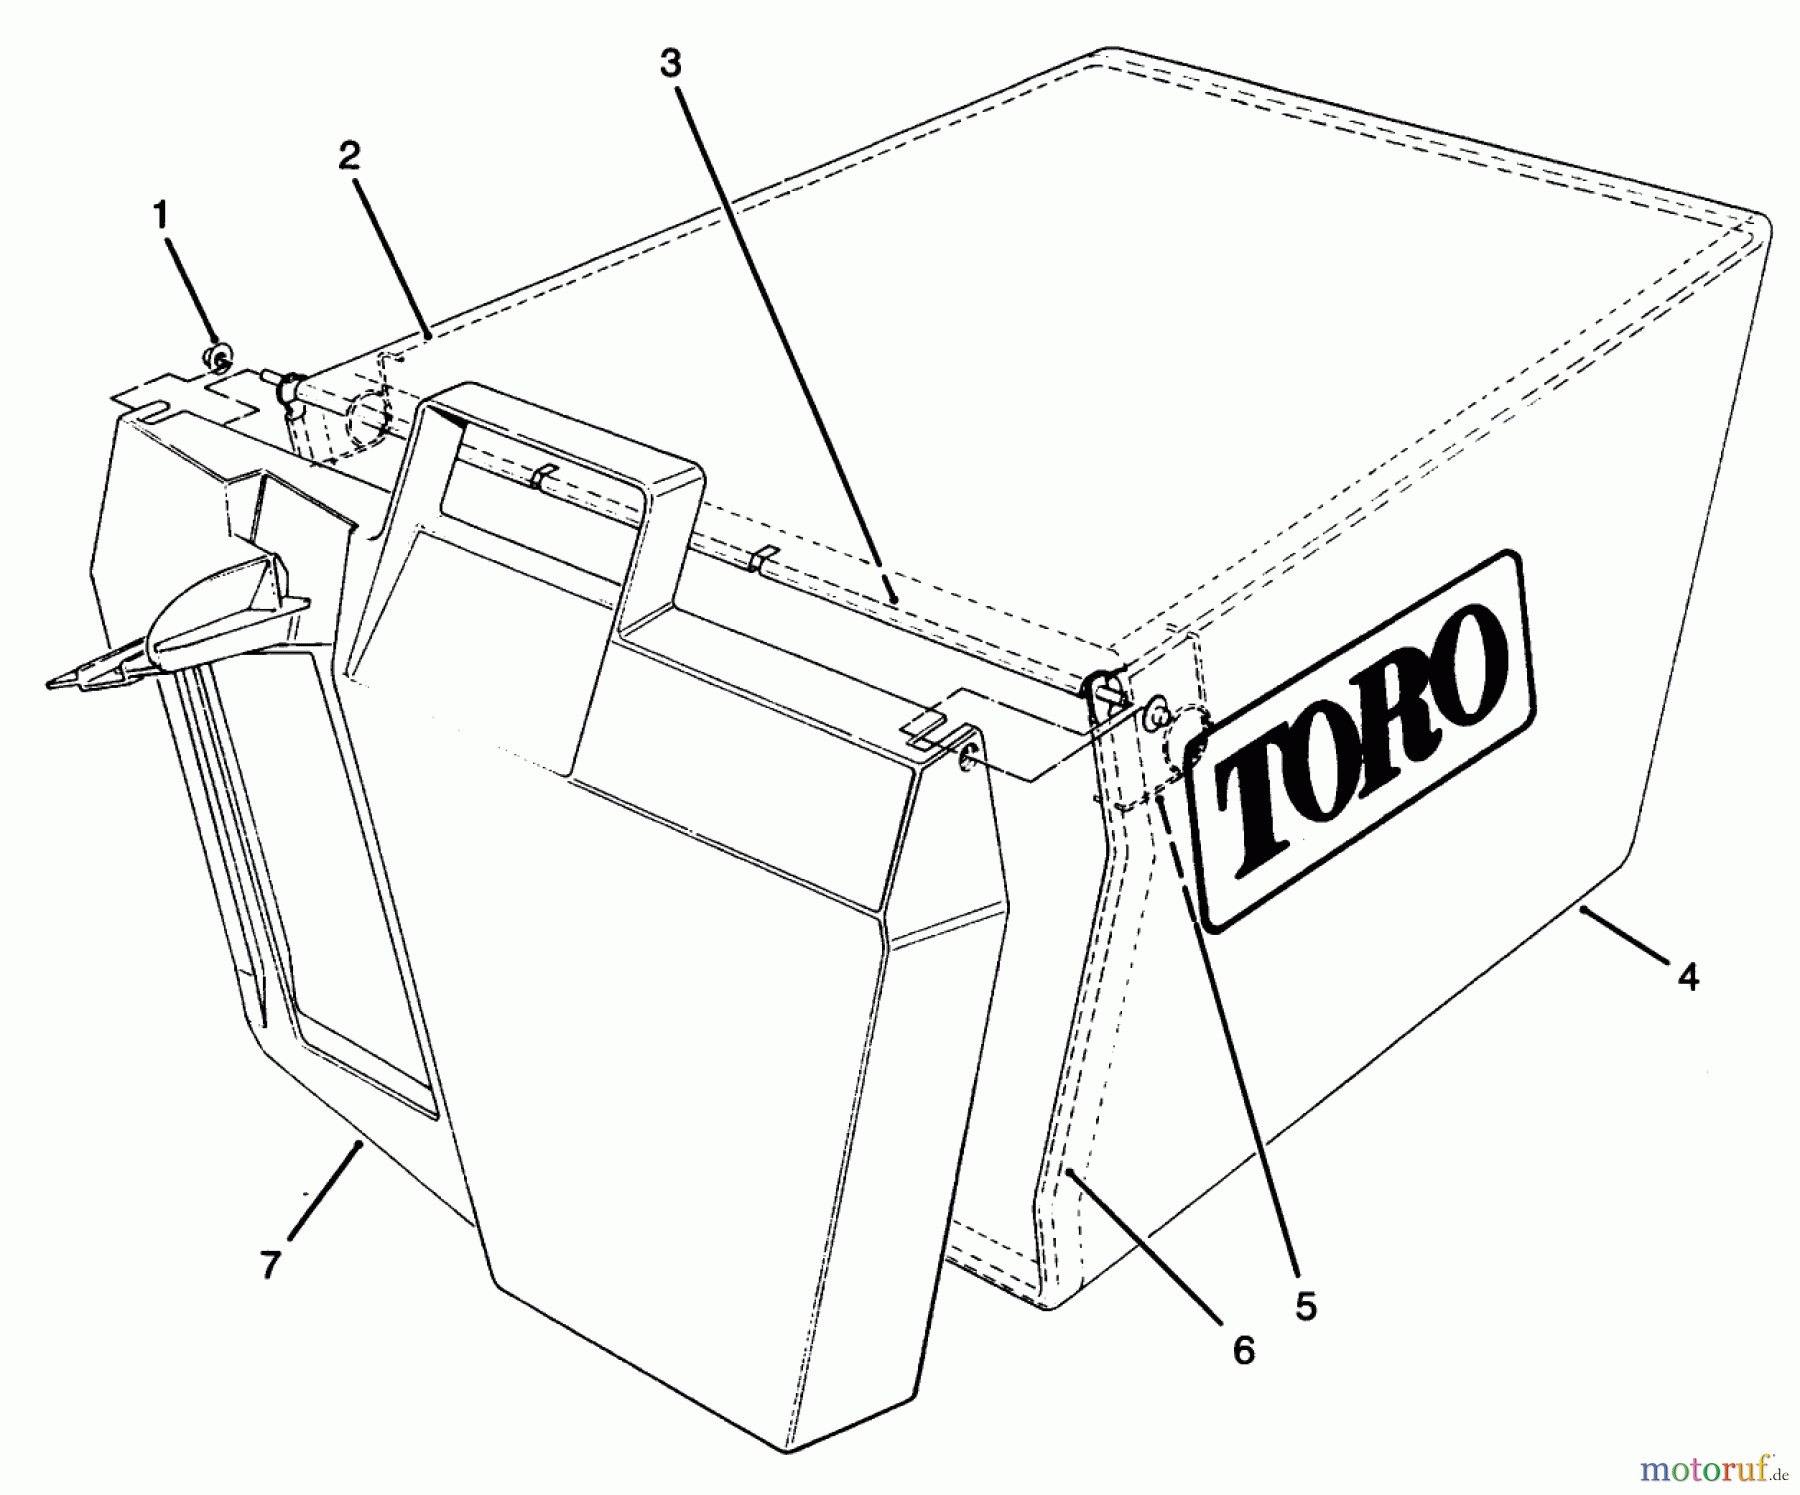  Toro Neu Accessories, Mower 59192 - Toro Rear Bag Kit, 21